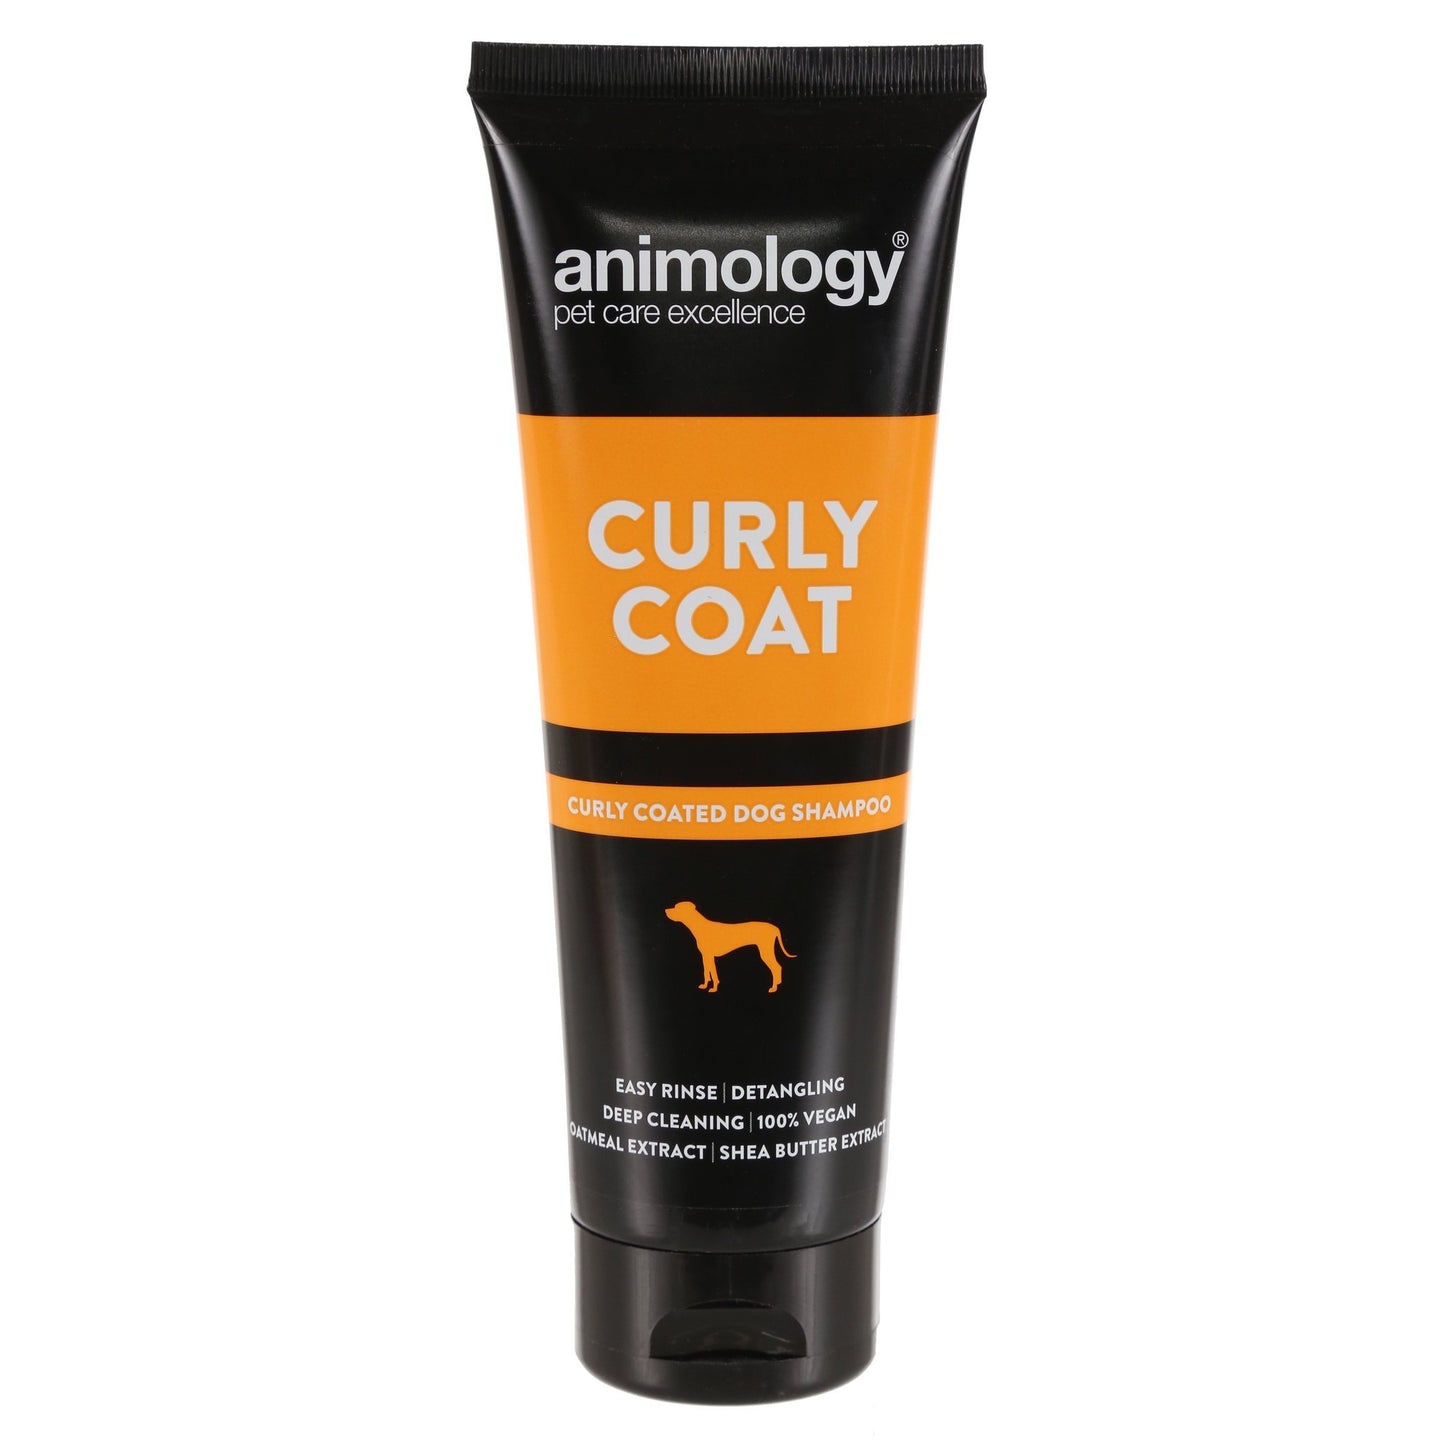 Animology Curly Coat Shampoo 250ml - Grooming